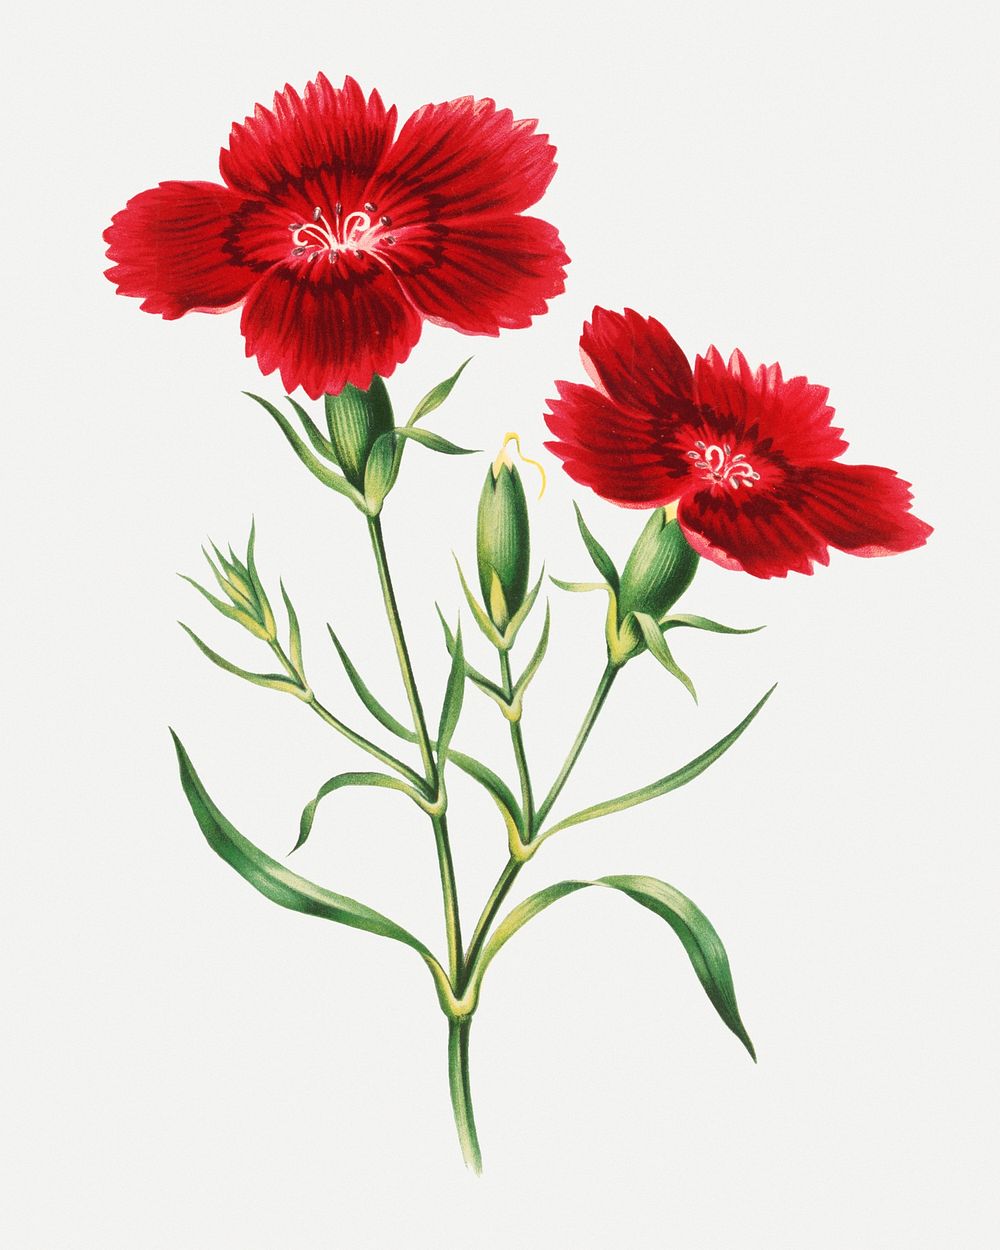 Vintage red flower illustration psd, remix from artworks by Currier & Ives